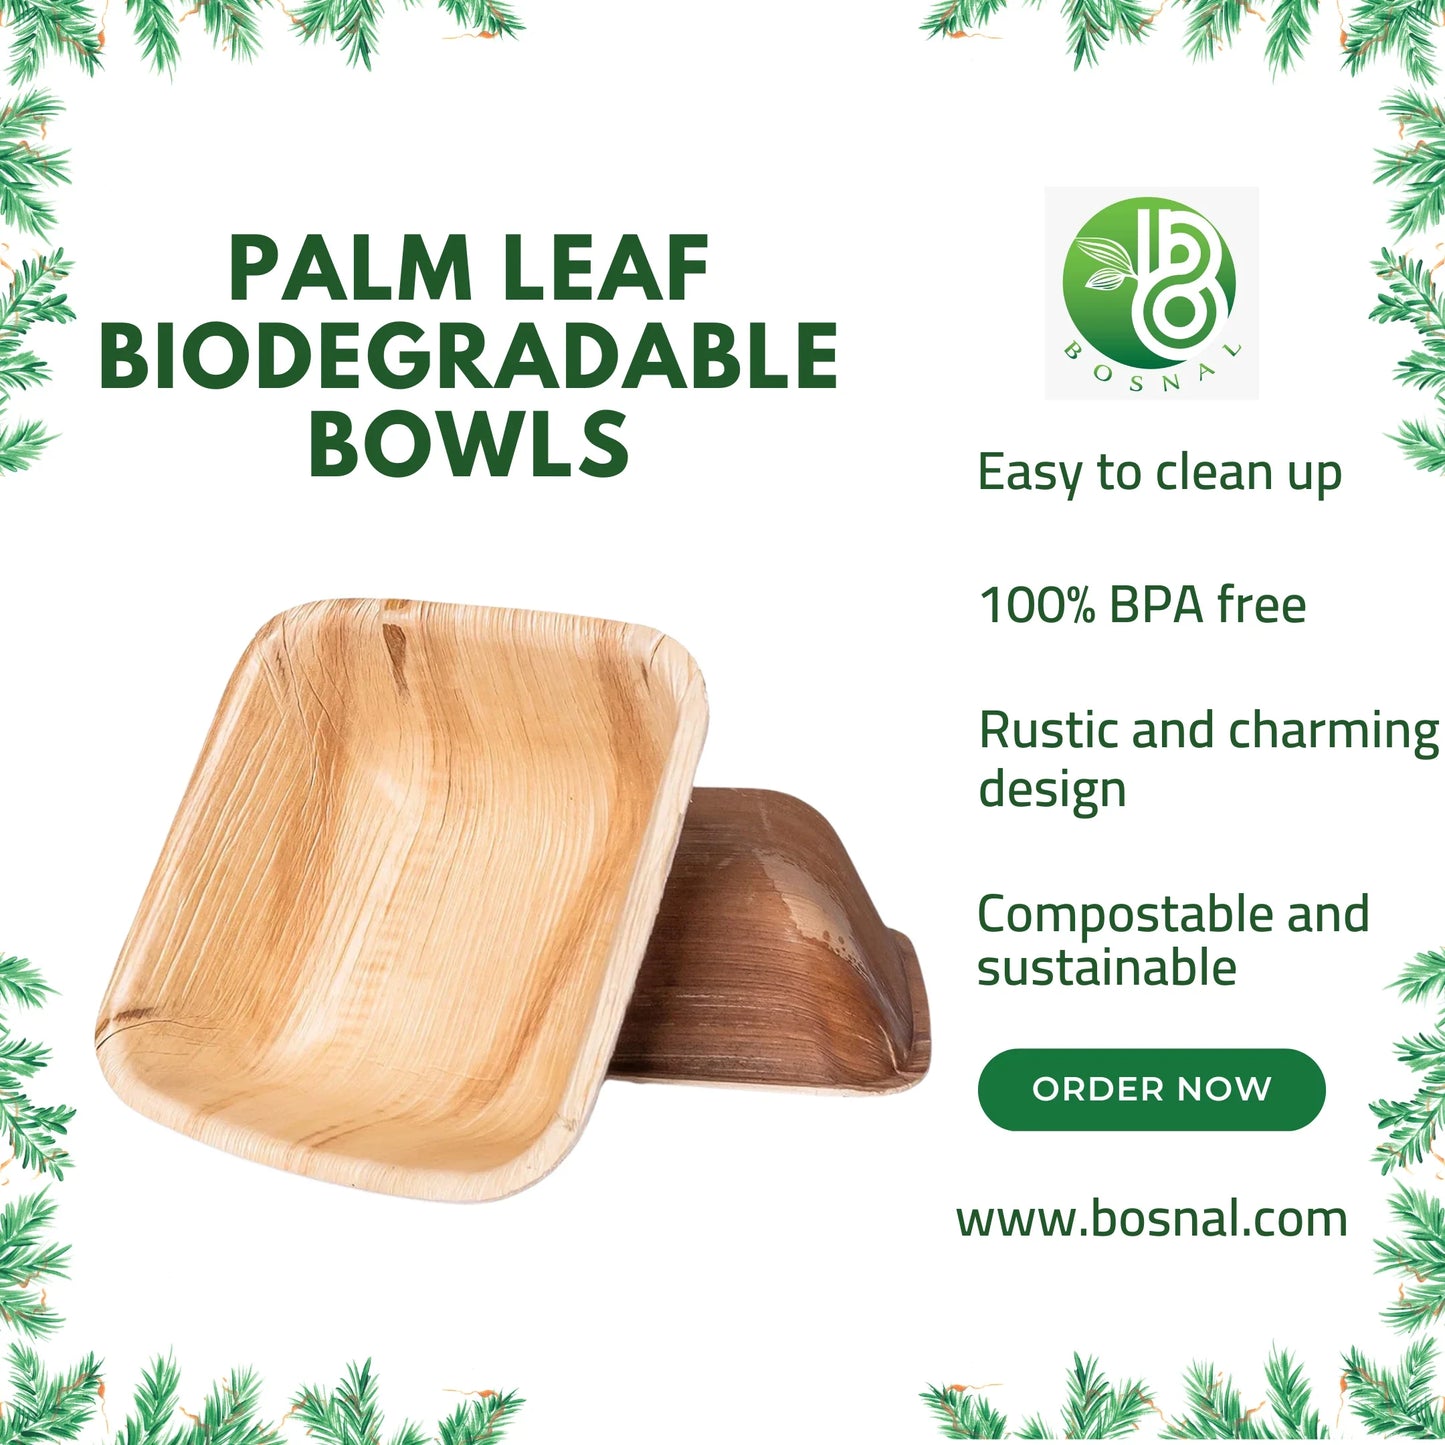 Bosnal - Palm Leaf Biodegradable Bowls, 5 inch, Square, 25 Pcs-3